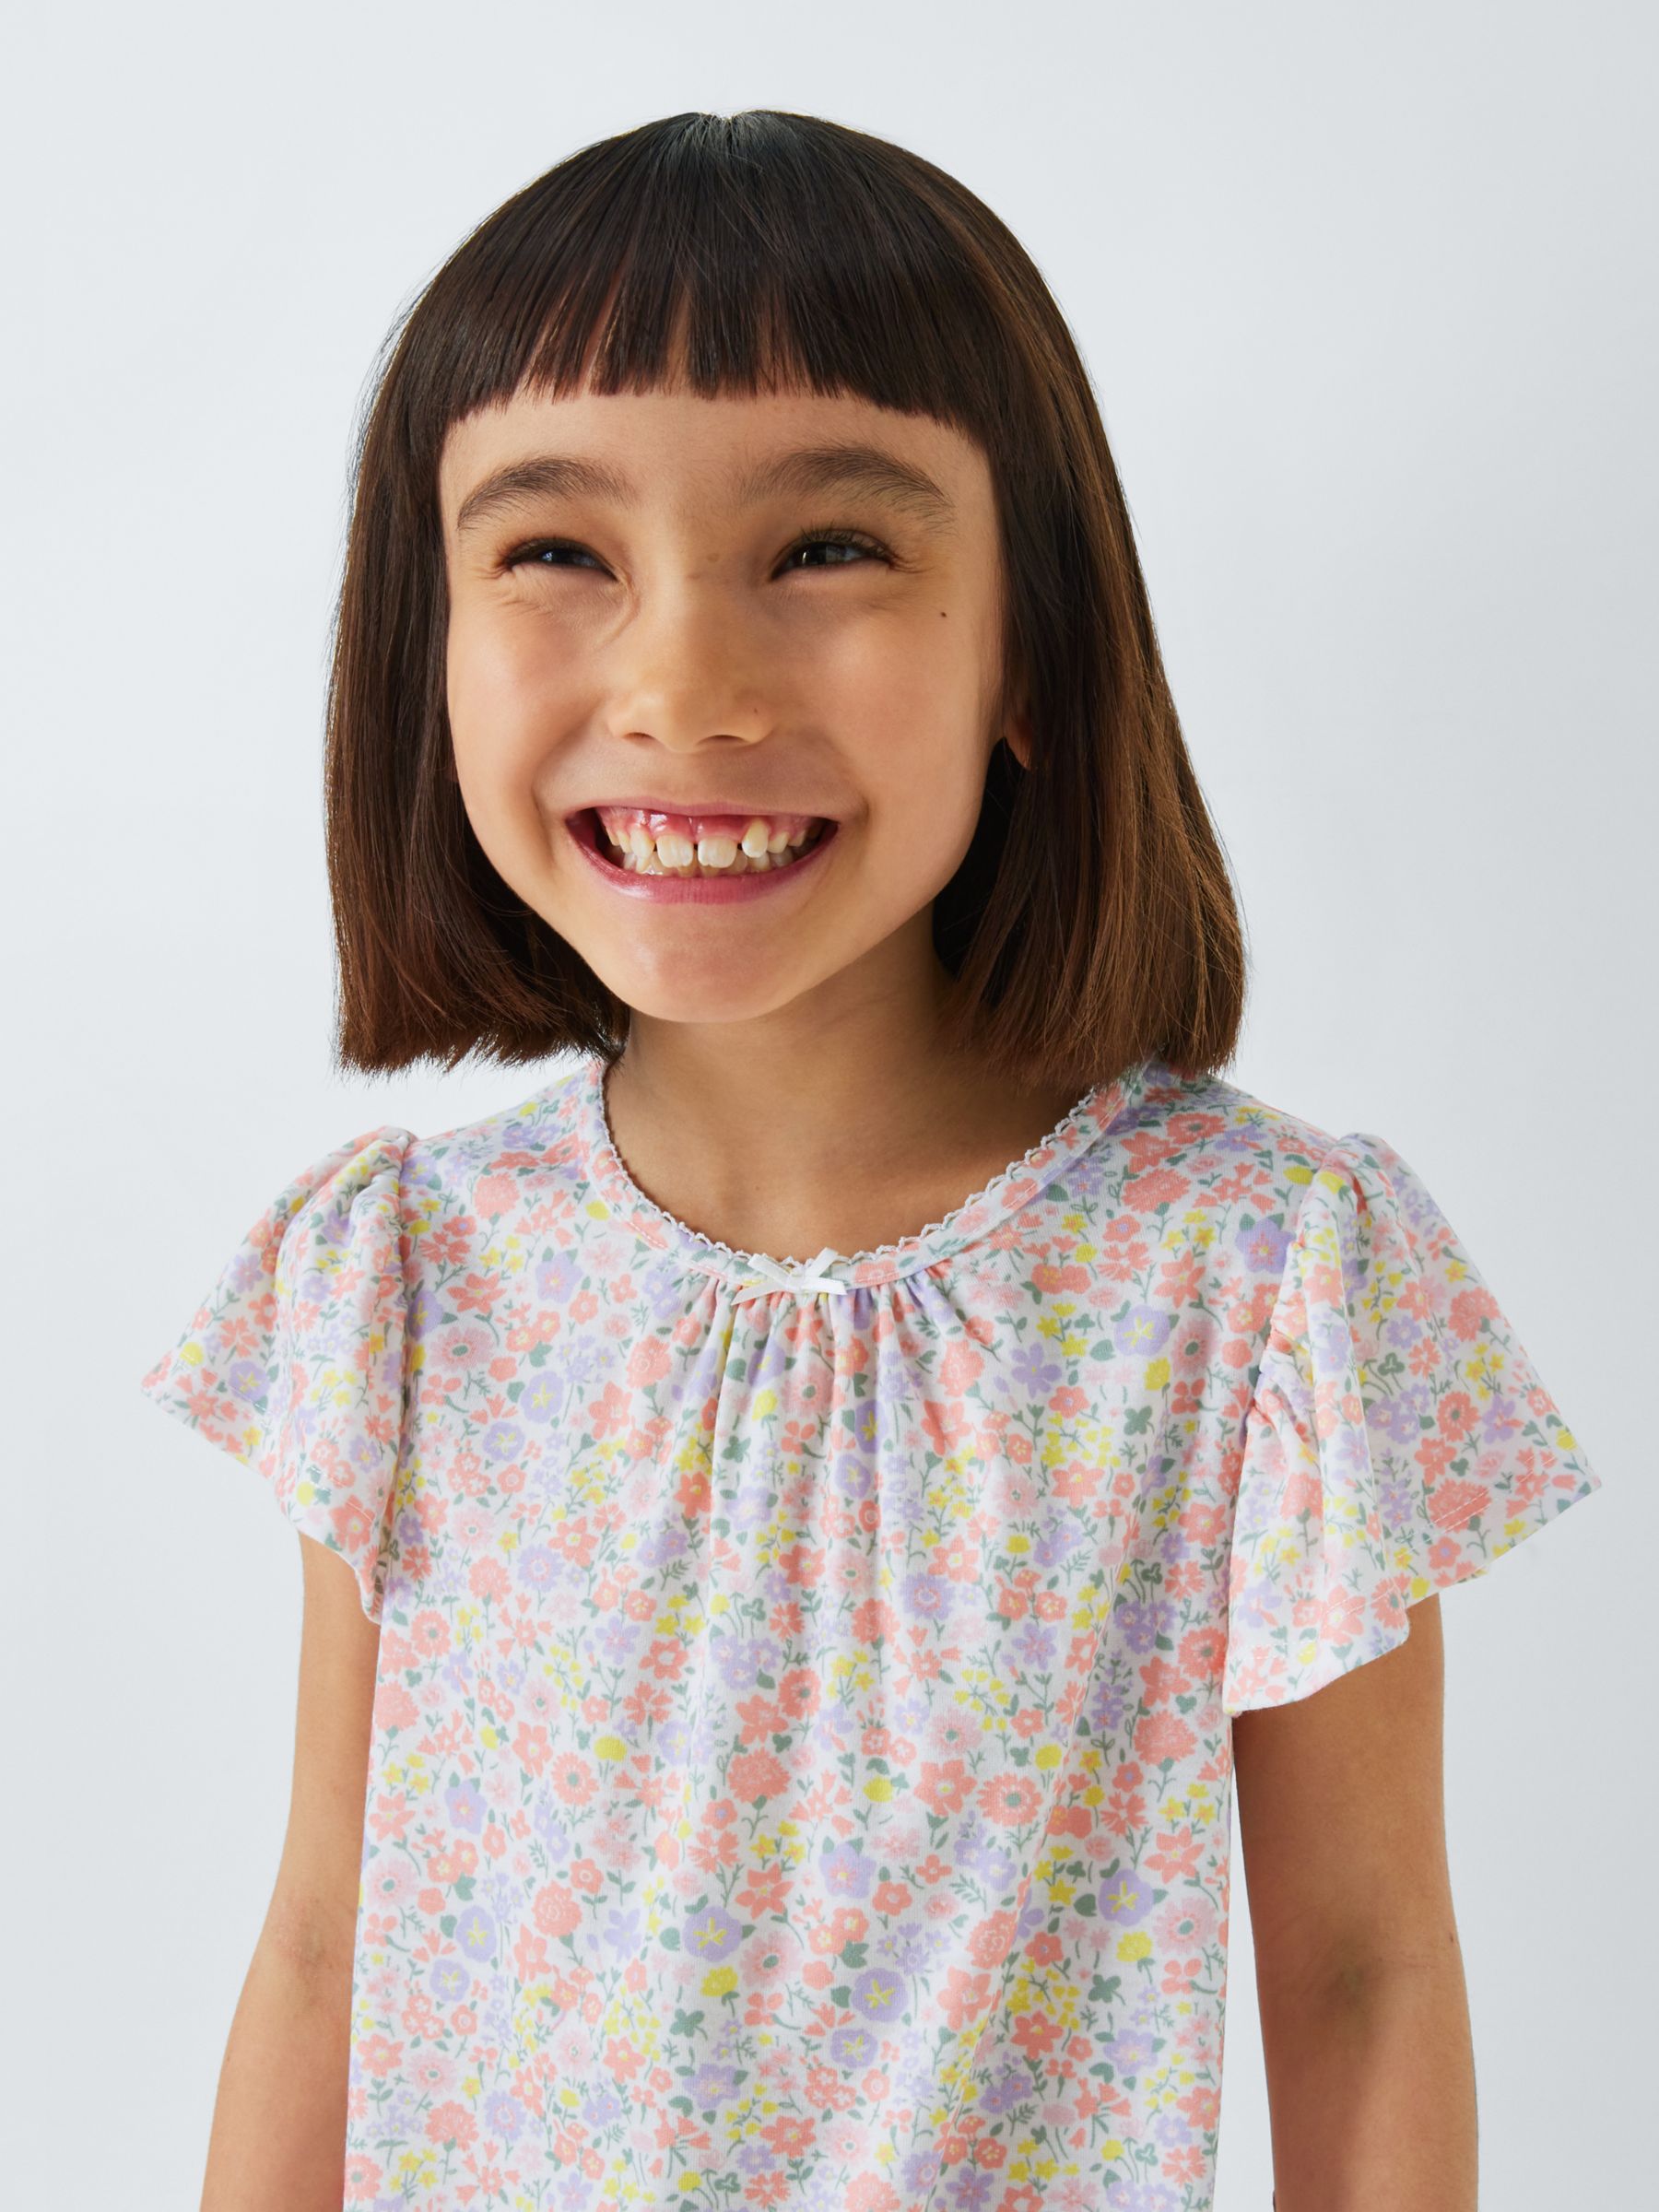 Buy John Lewis Kids' Ditsy Floral Nightdress, Multi Online at johnlewis.com